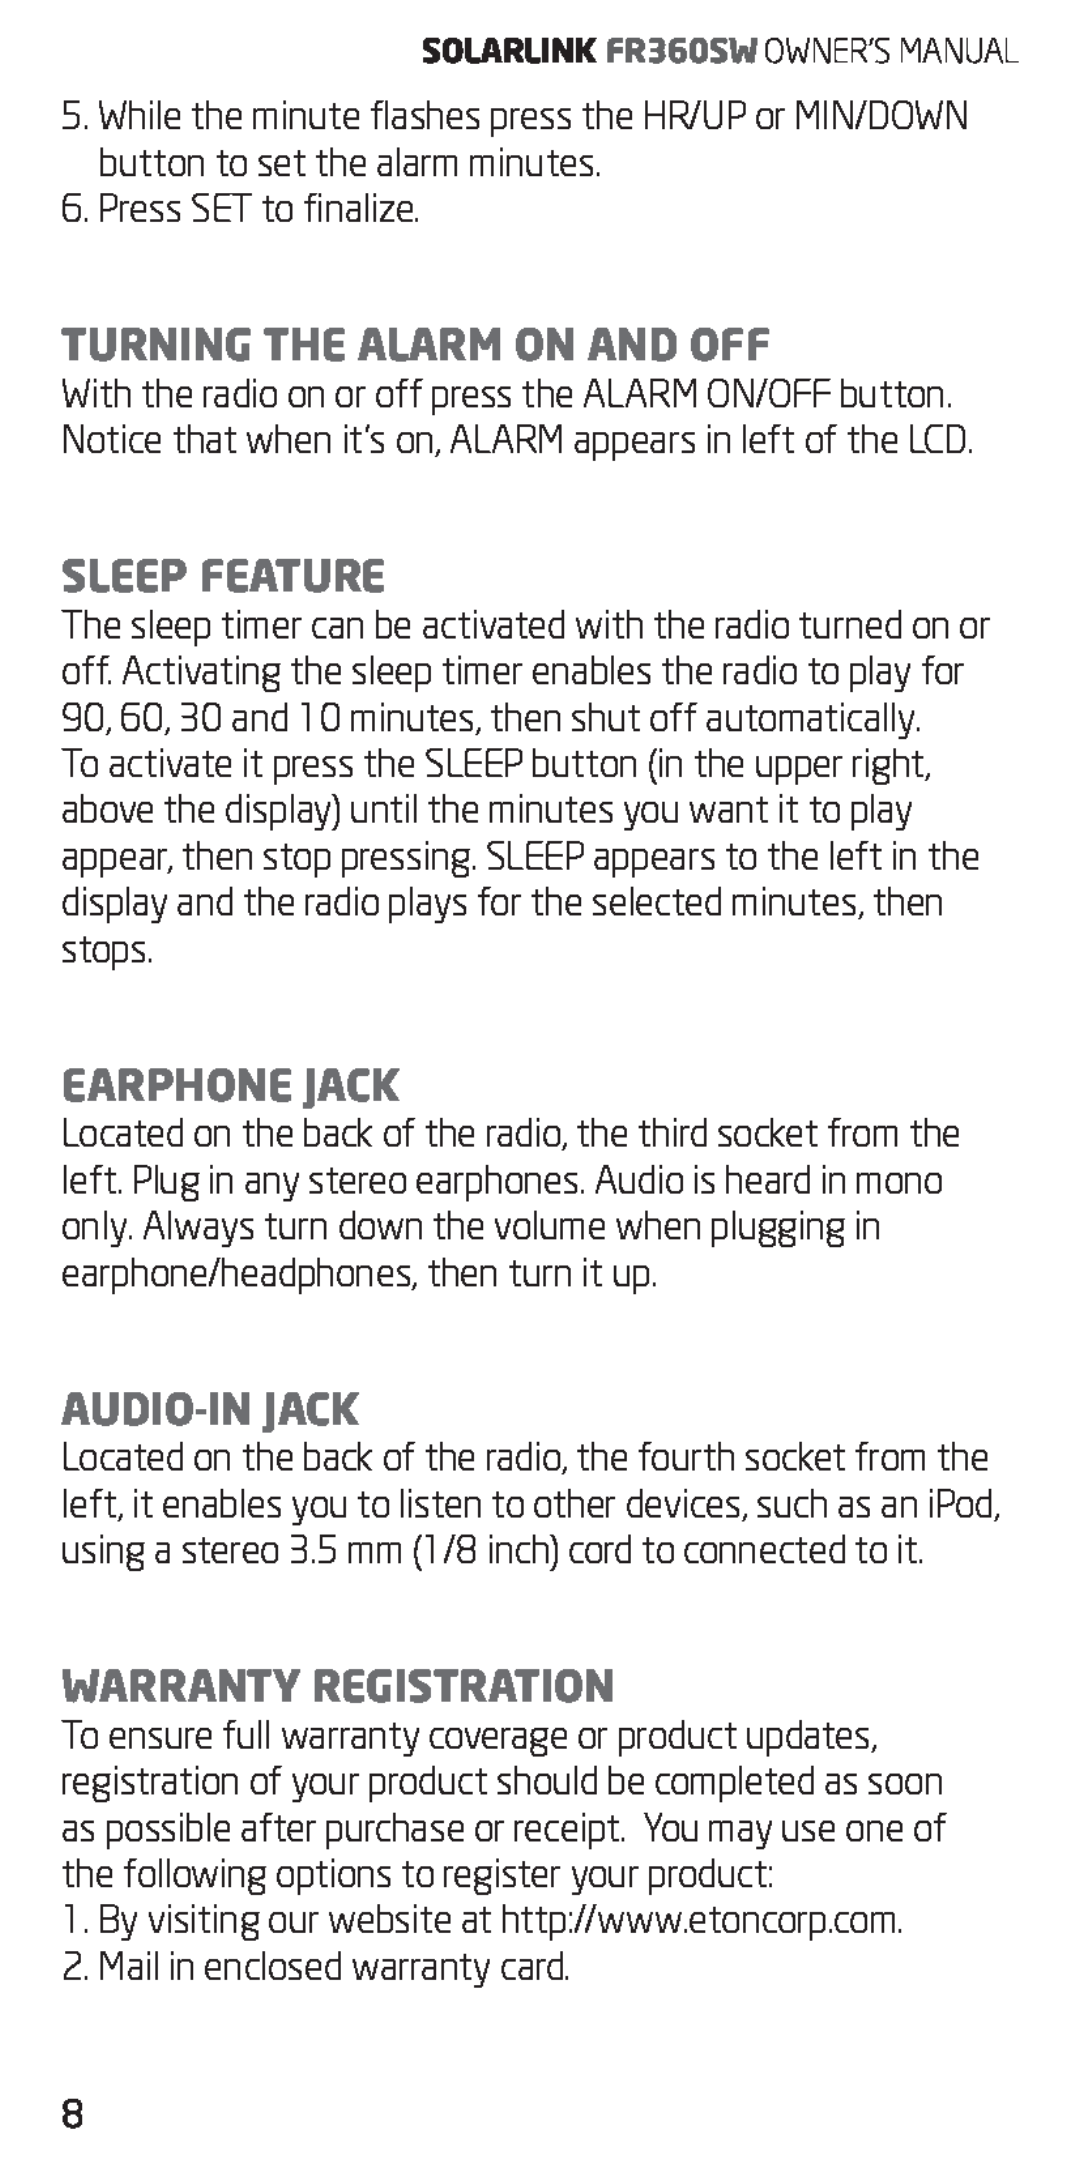 Eton FR360 owner manual Turning The Alarm On And Off, Sleep Feature, Earphone Jack, Audio-Injack, Warranty Registration 